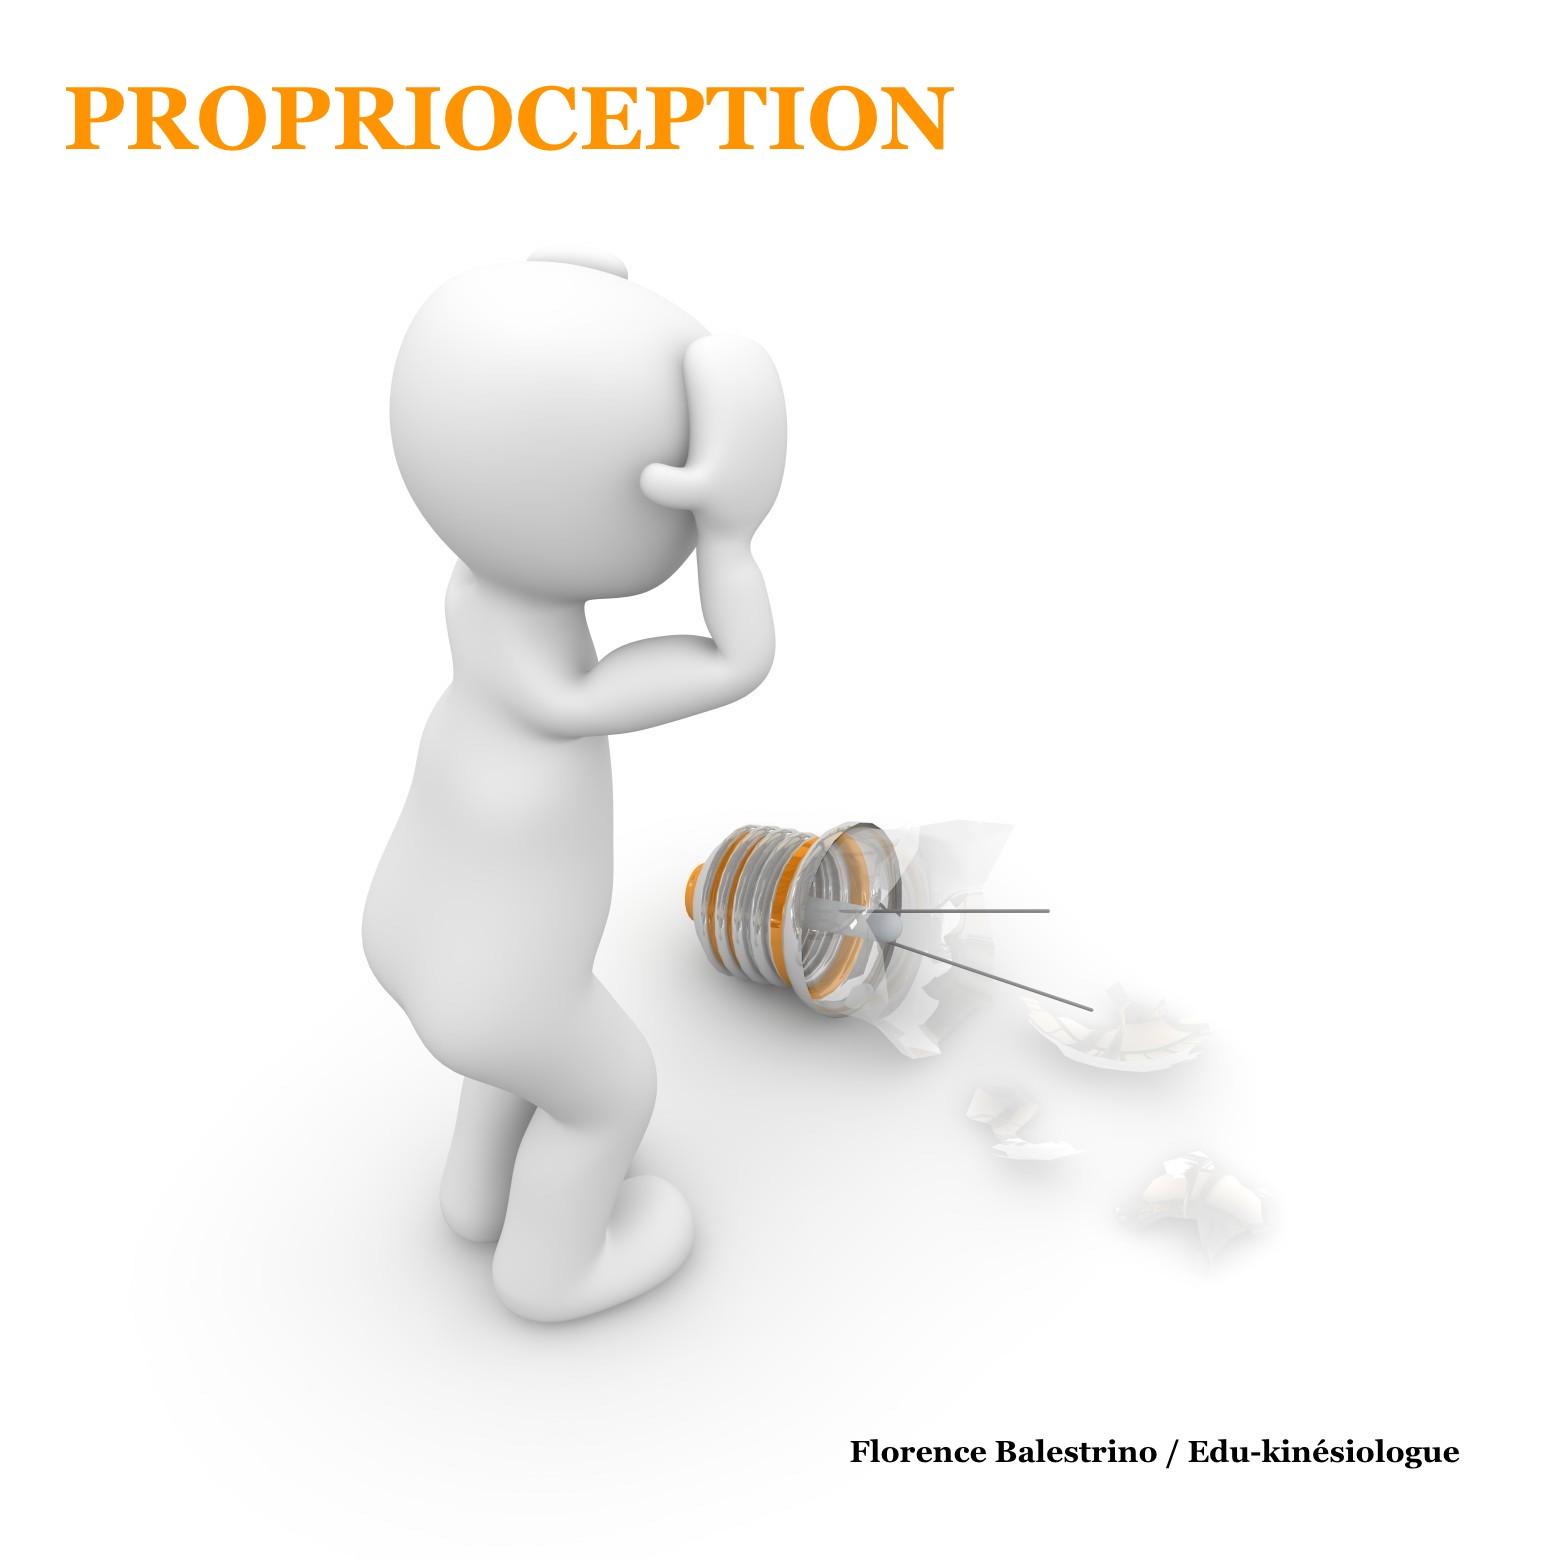 Proprioception